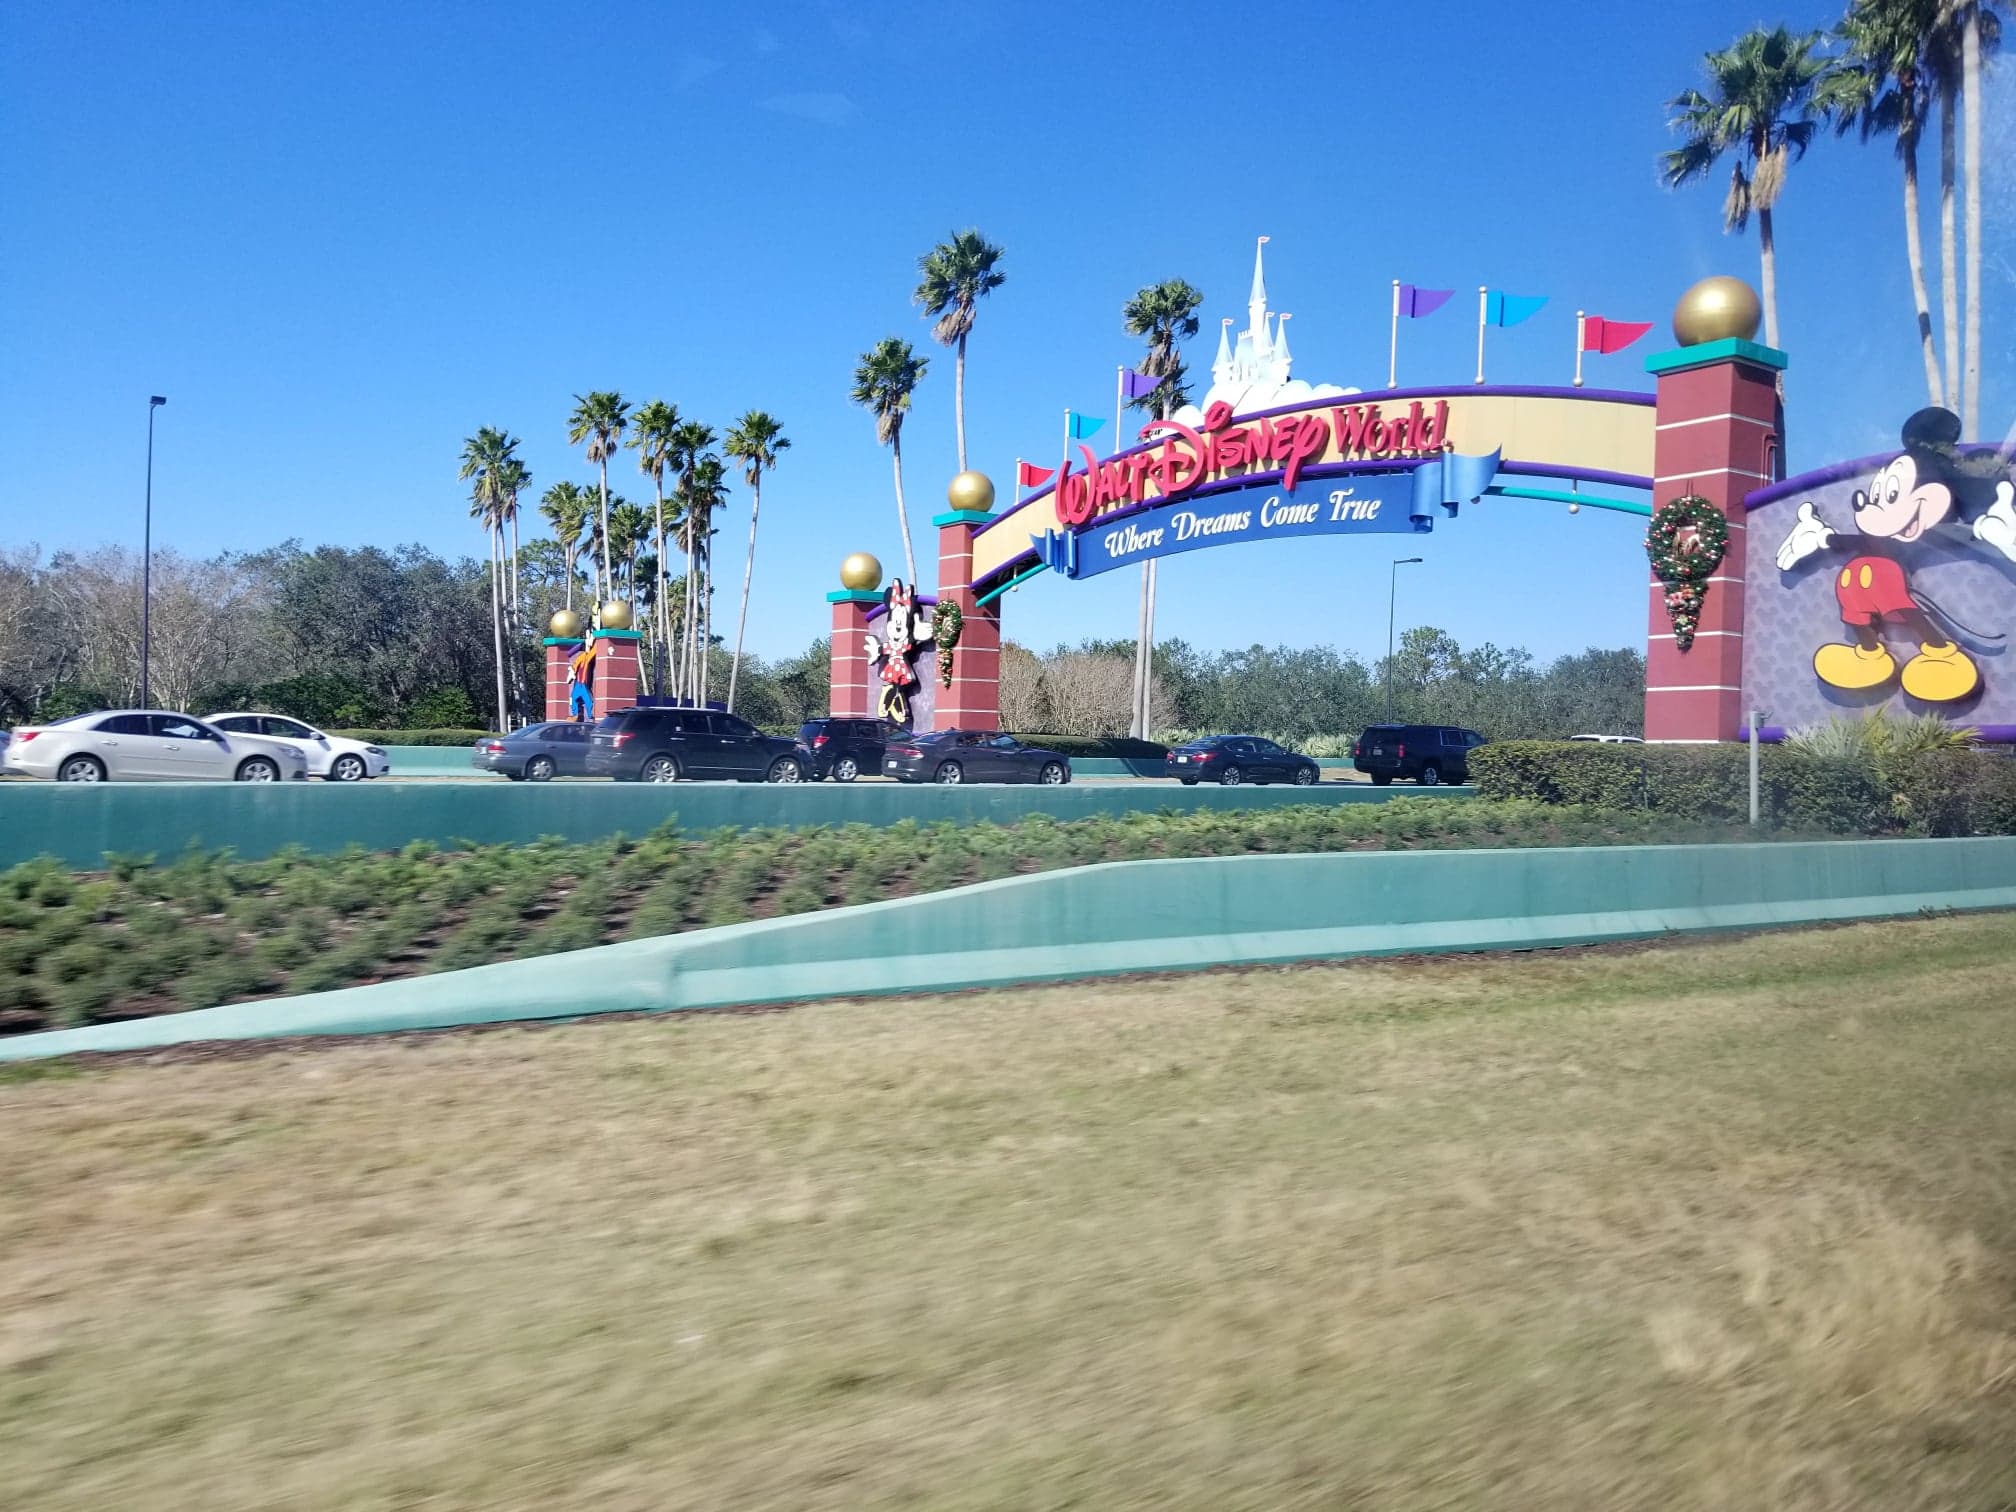 Walt Disney Wolrd where dreams come true entrance gate in Orlando, FL